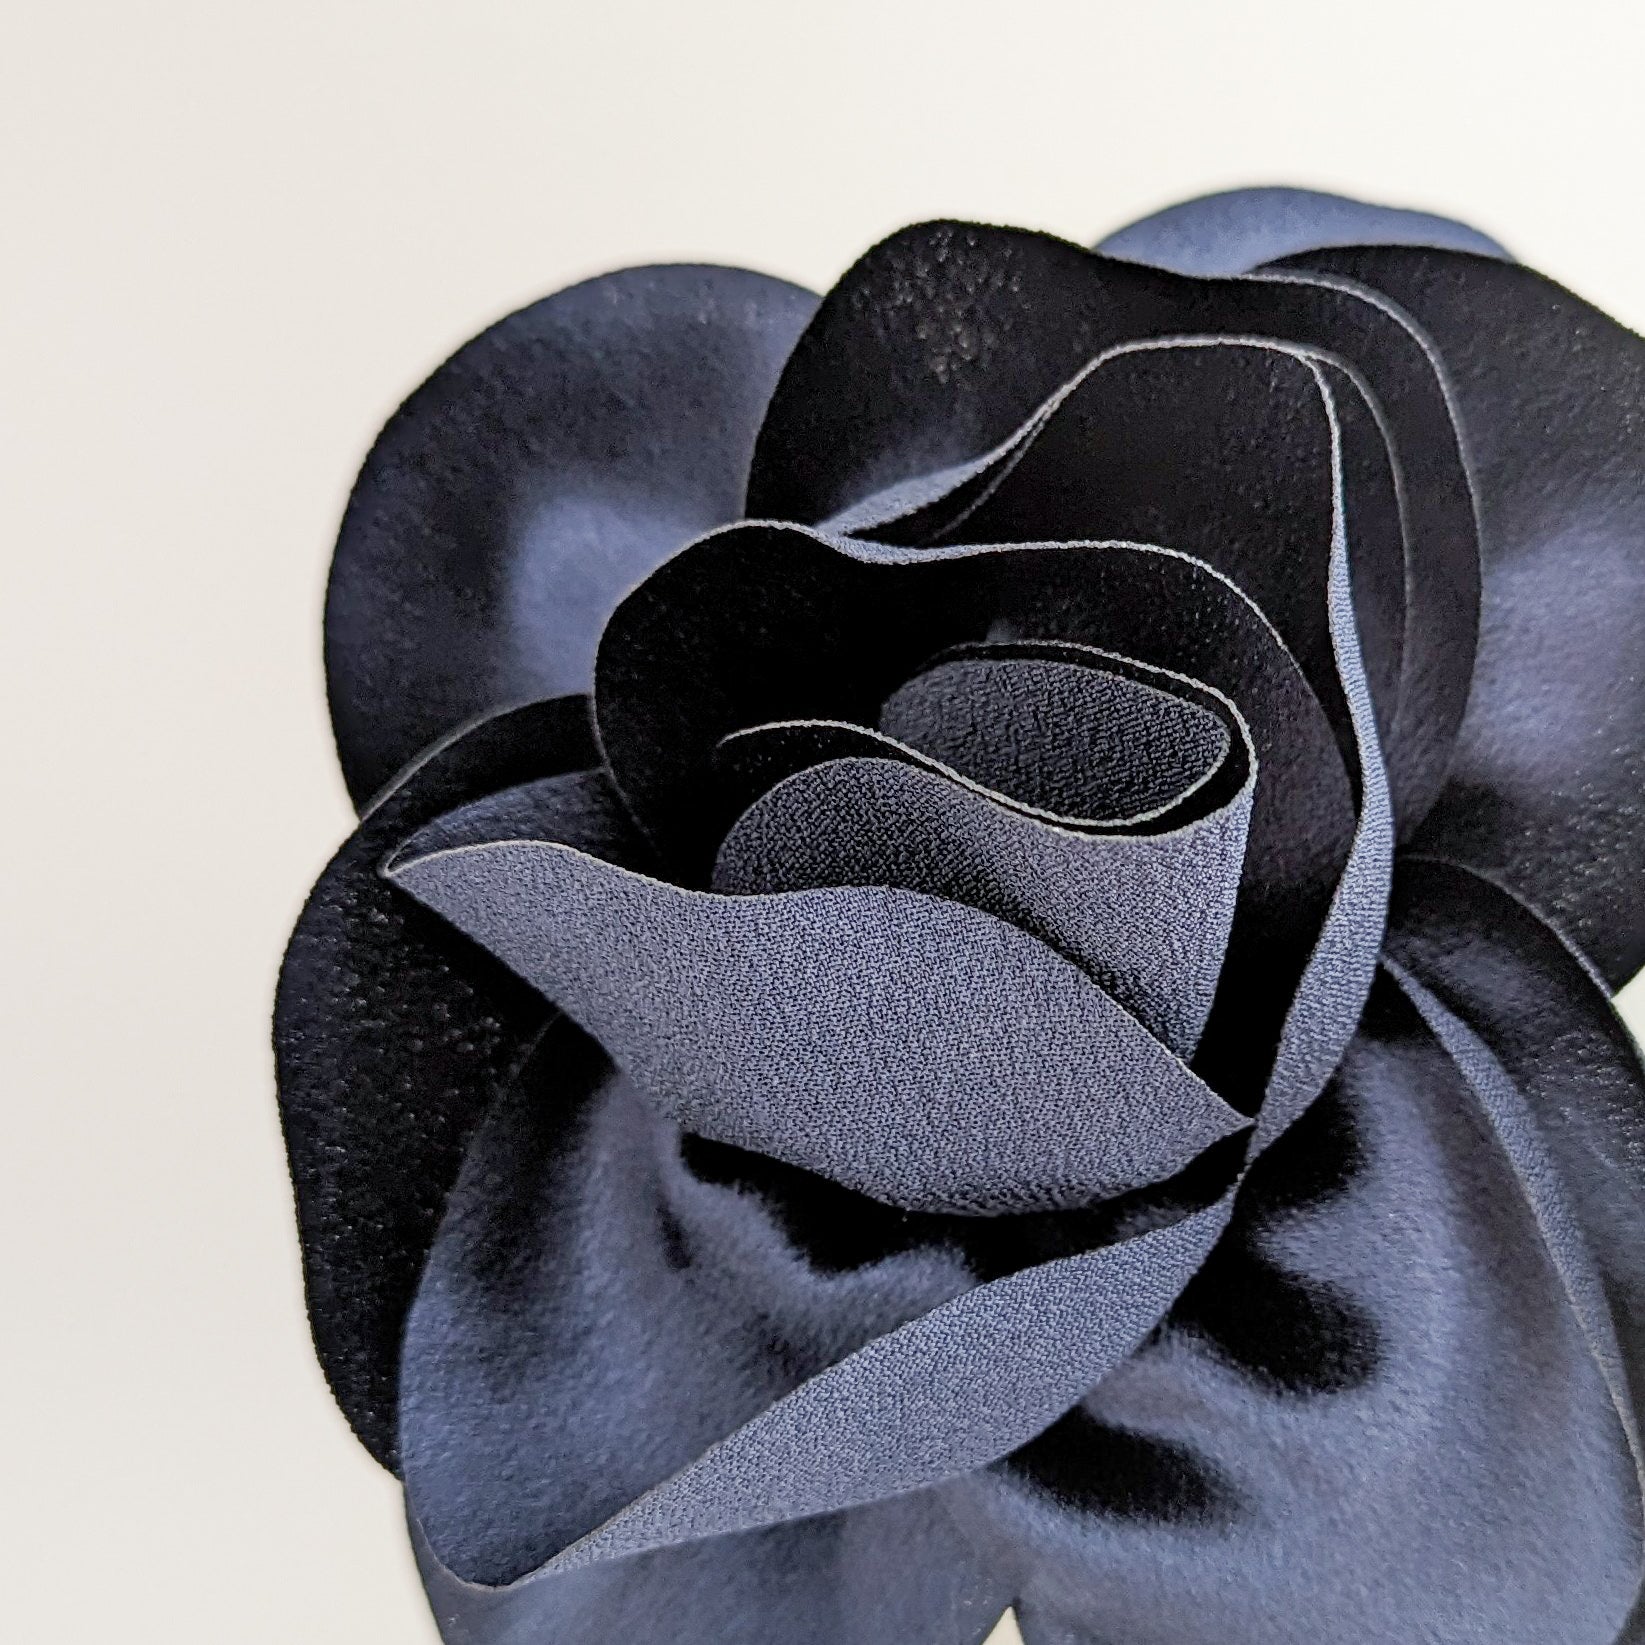 Navy blue satin rose fascinator hat